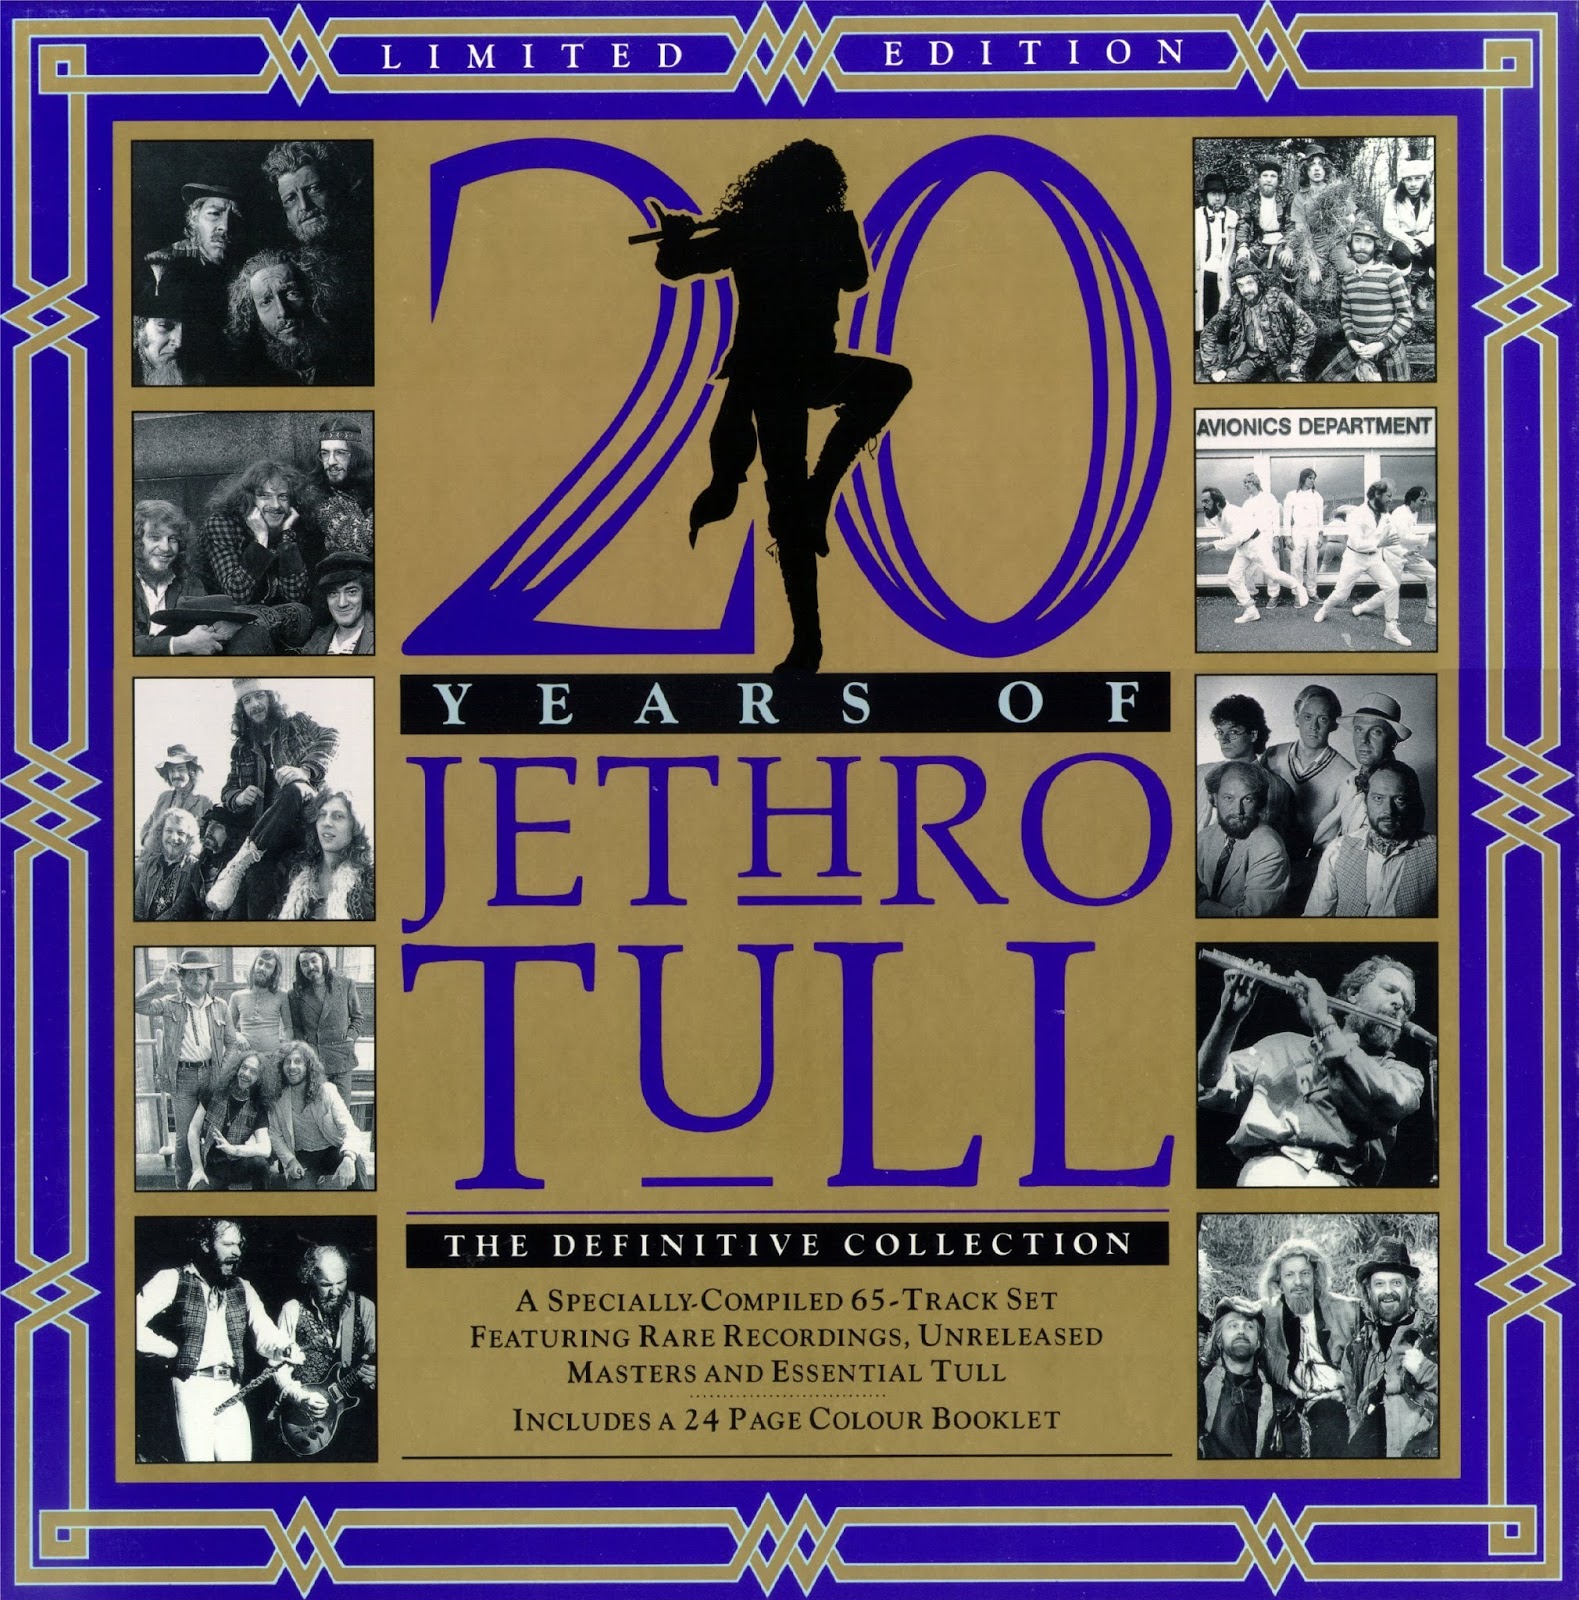 1988 - Jethro Tull - 20 Years Of Jethro Tull (Box Set)